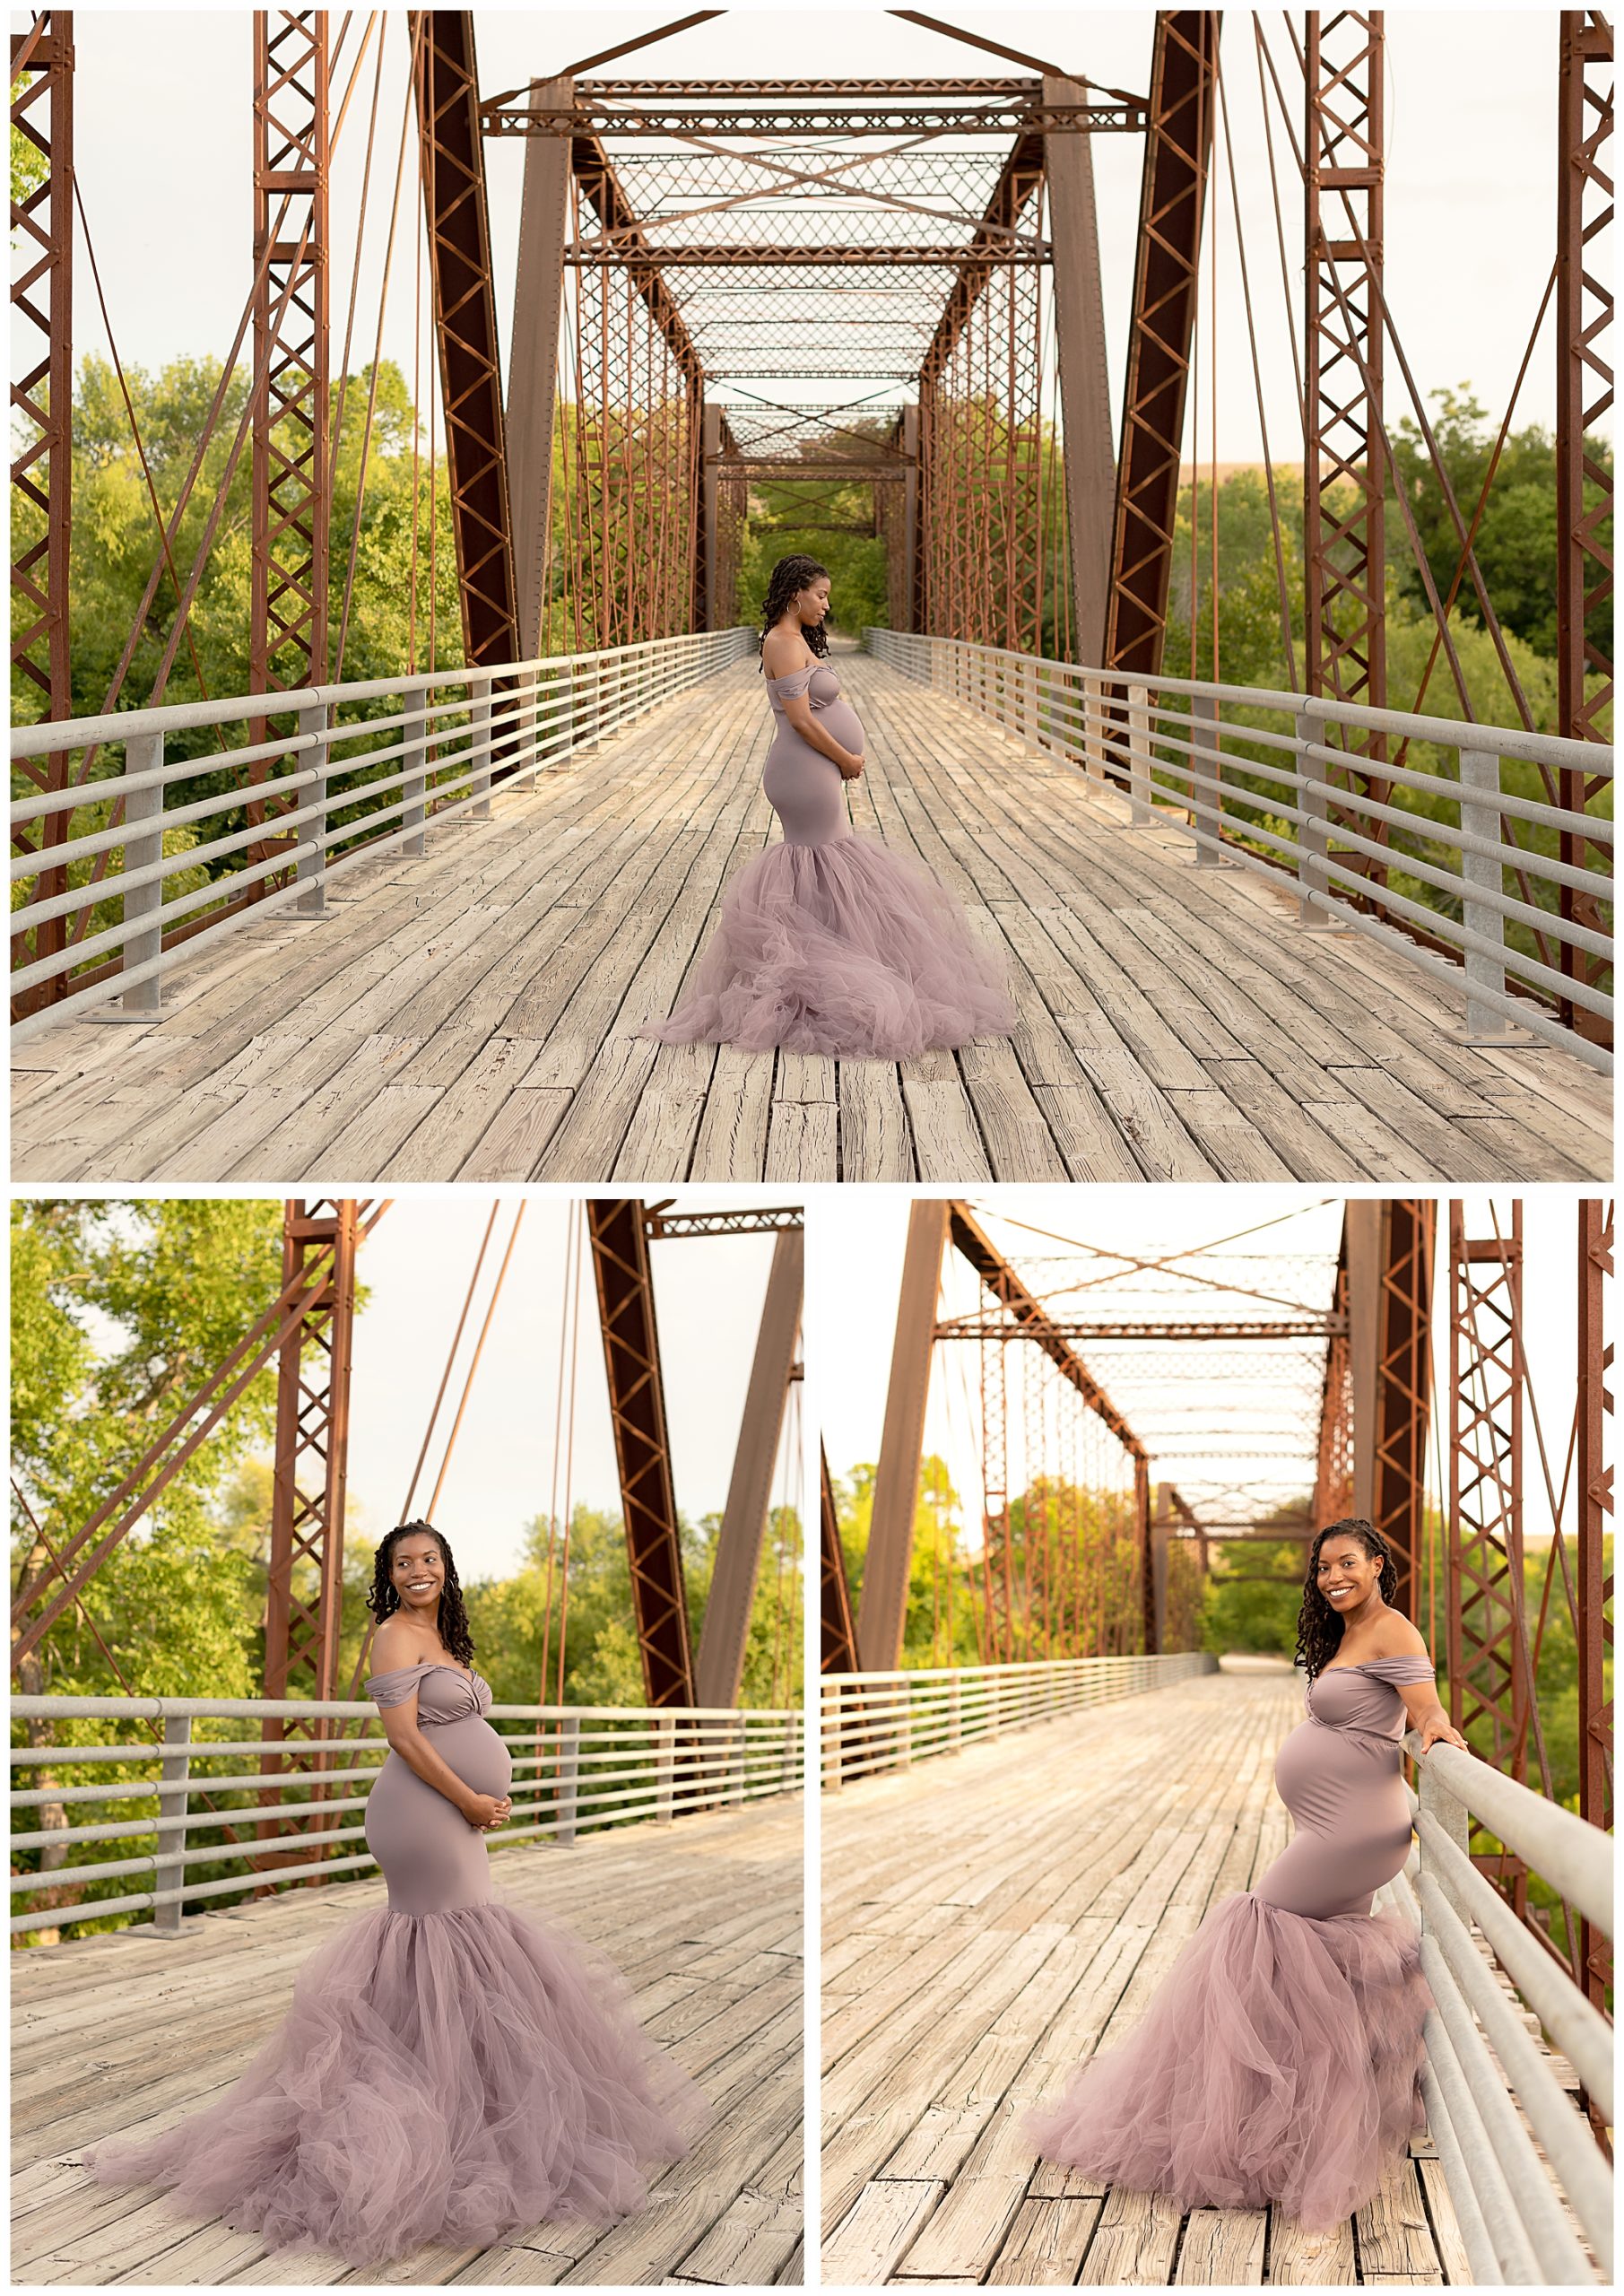 pregnant woman purple tulle dress historical bridge